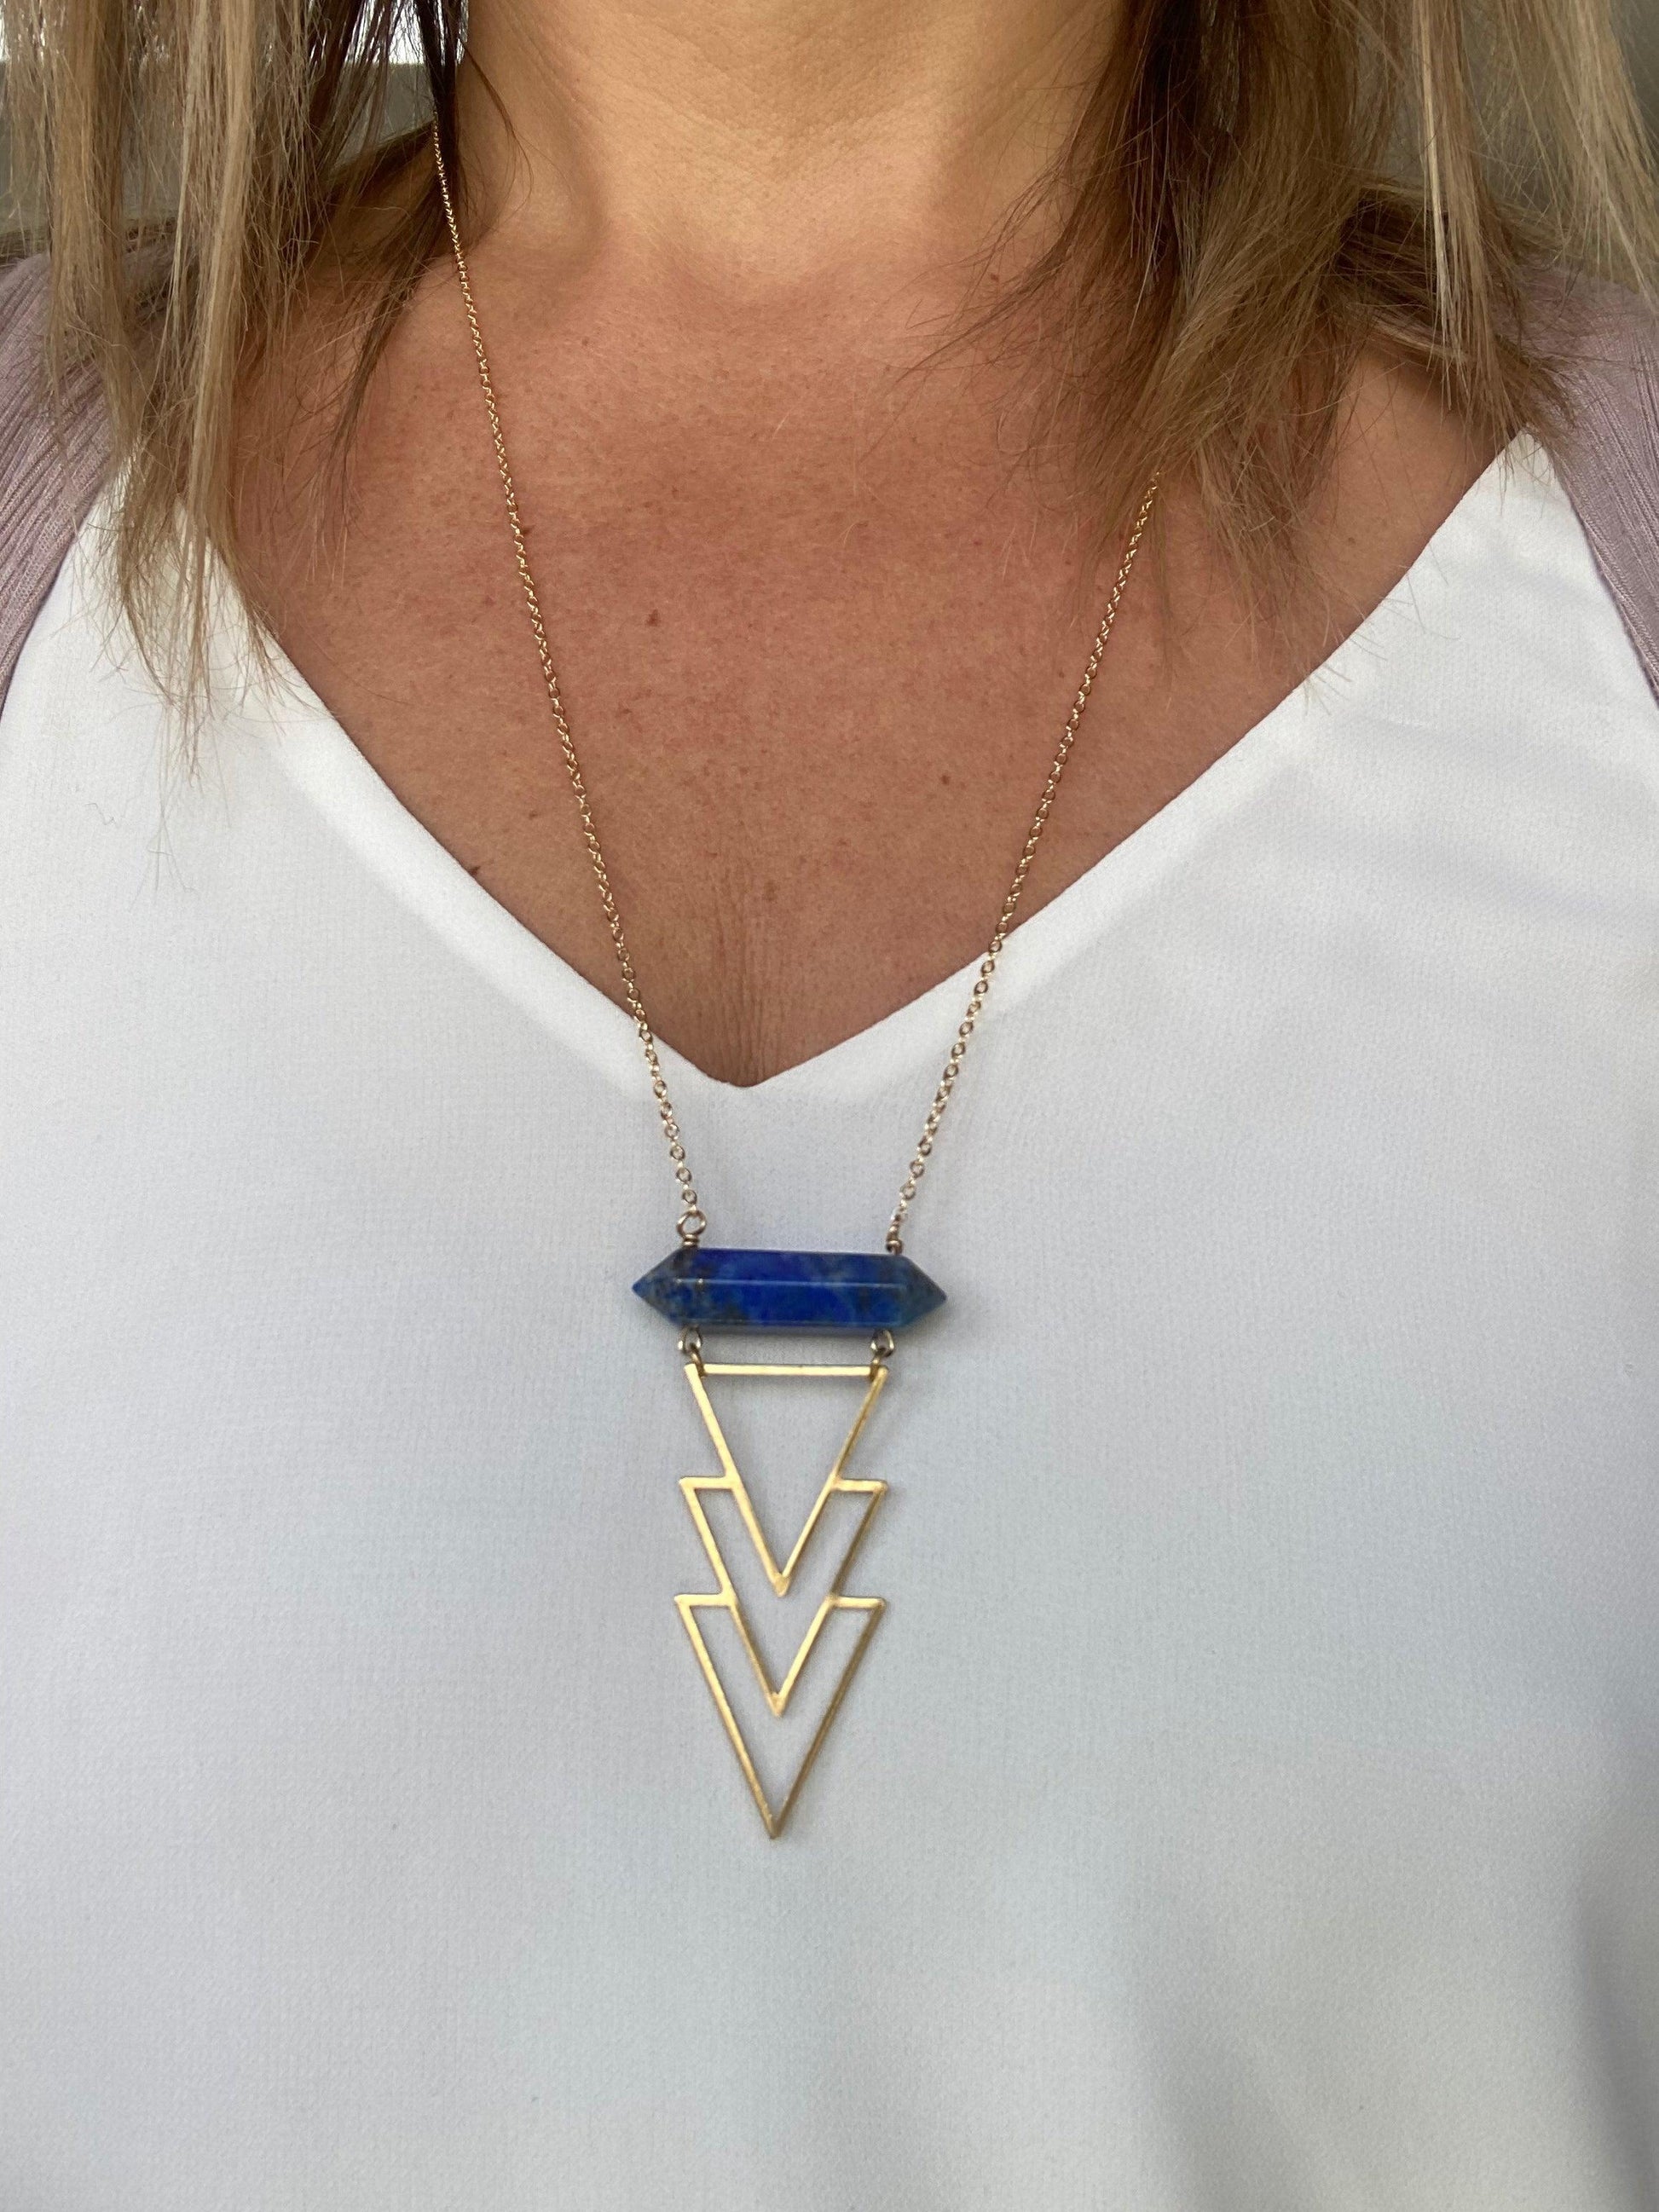 Pharaoh Necklace - Blue Lapis with Sacred Geometry Symbol - Kybalion Jewellery